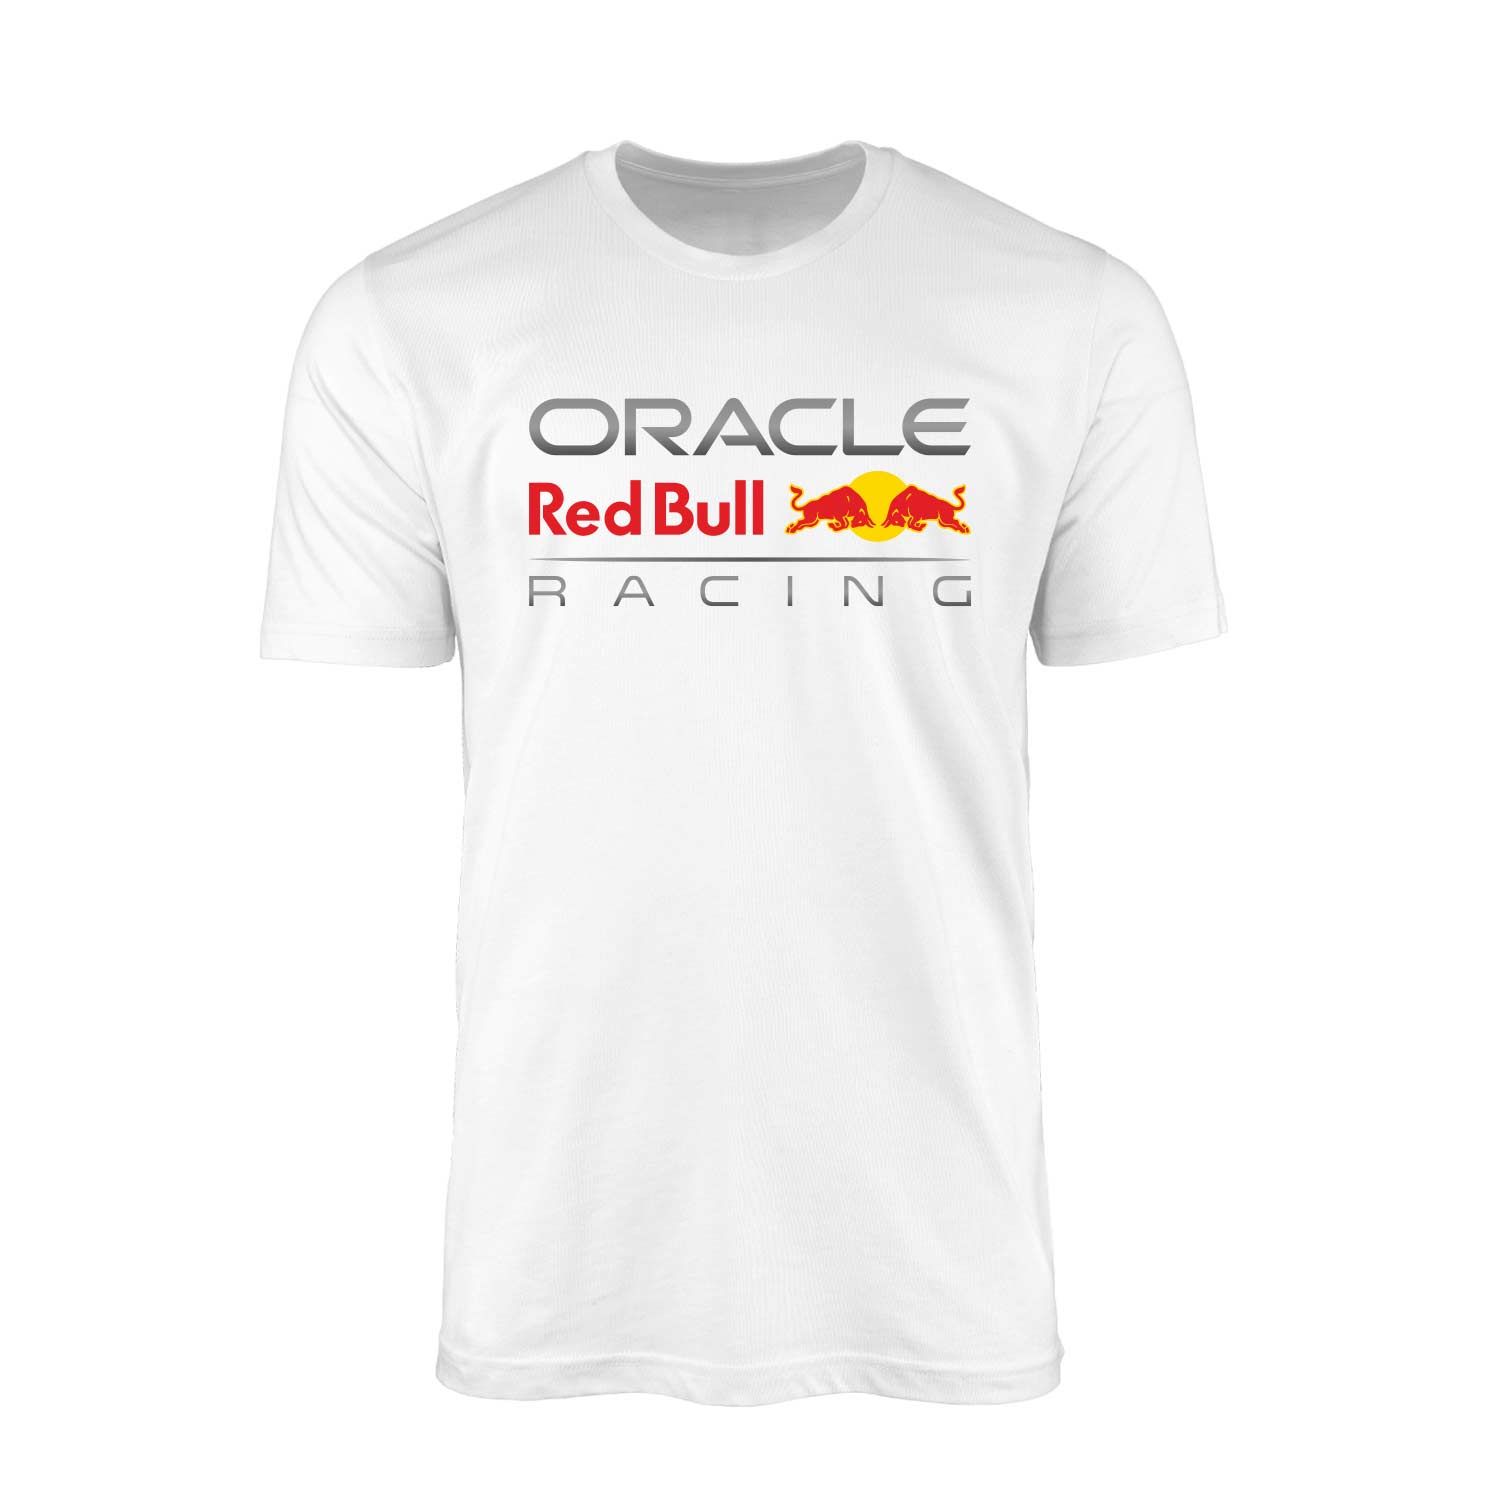 Oracle Red Bull Racing Beyaz Tişört